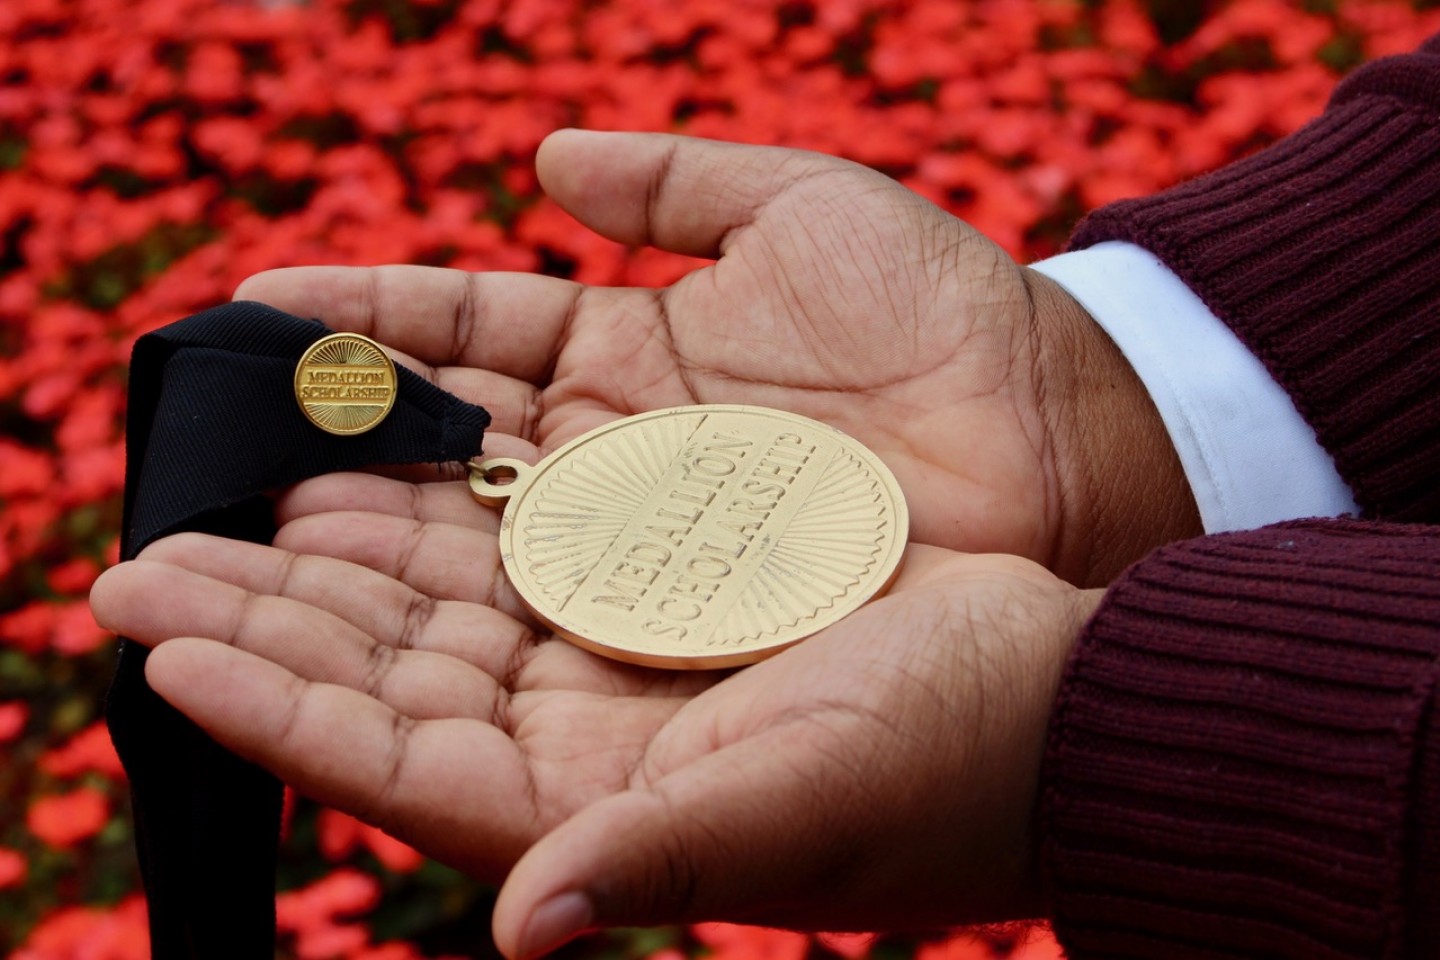 Hands holding a Medallion Scholarship medal